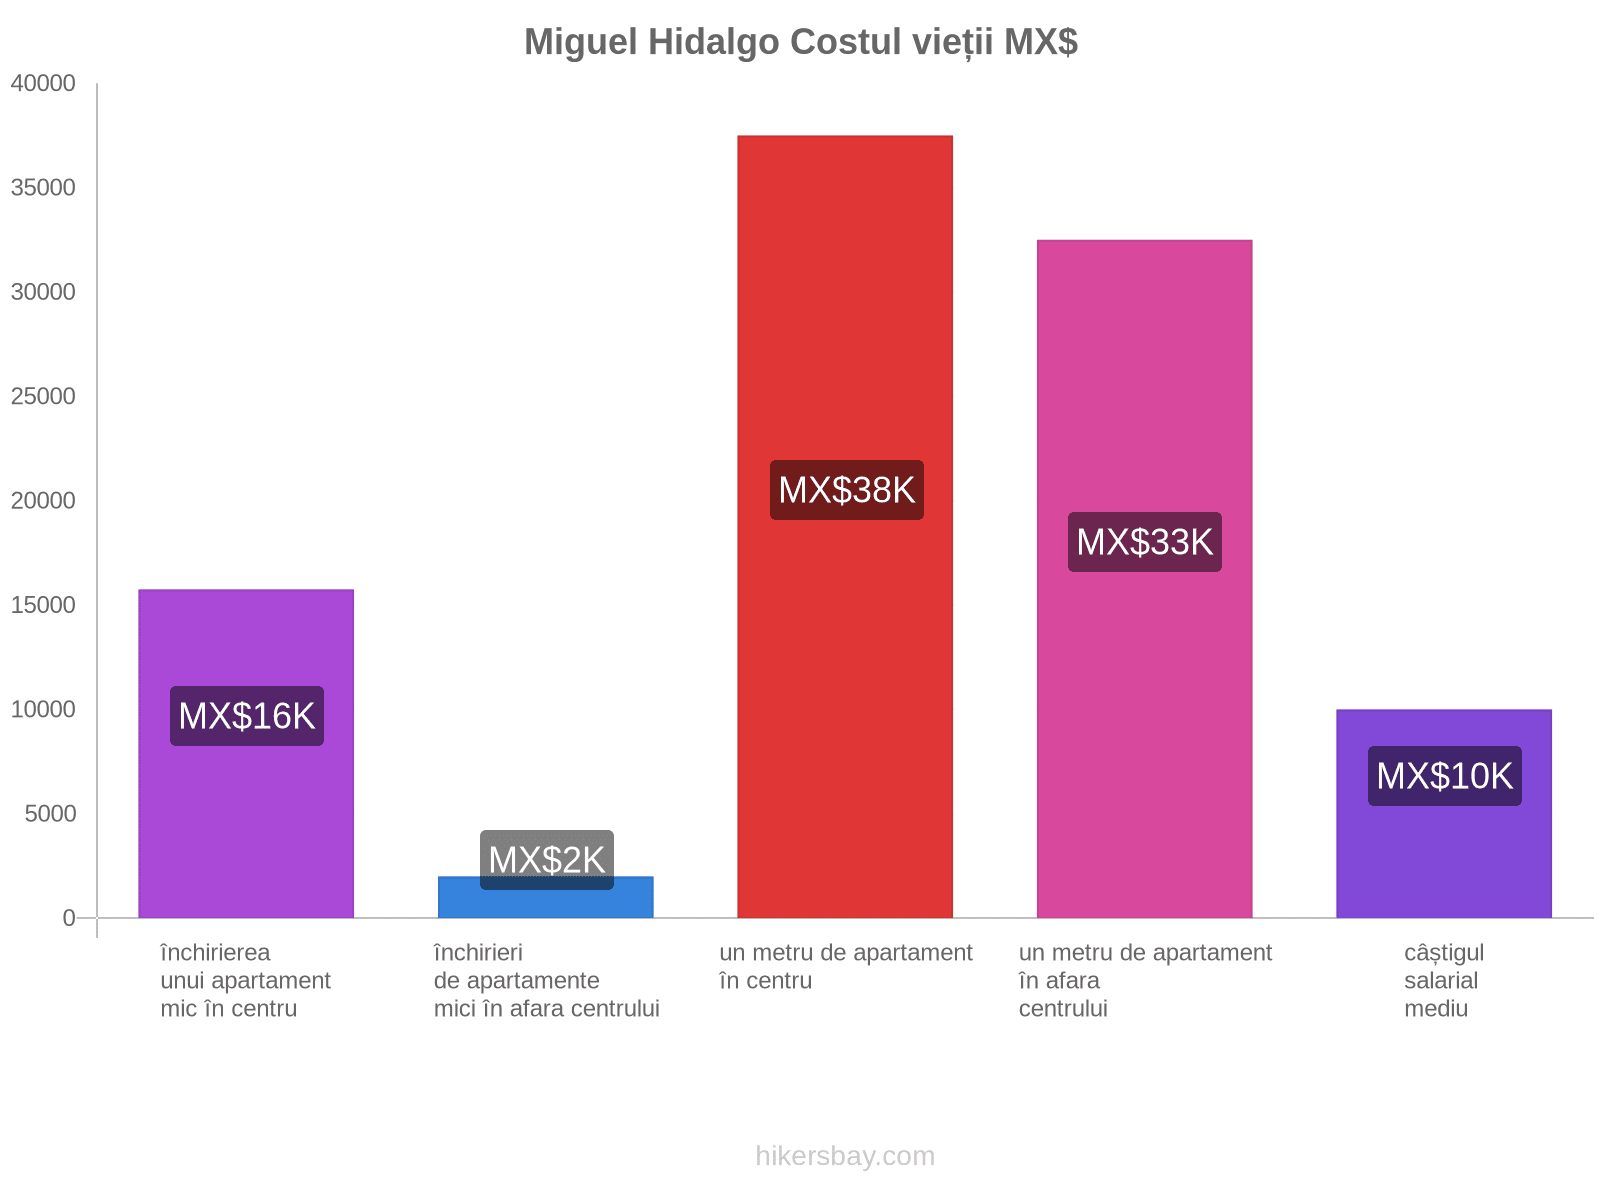 Miguel Hidalgo costul vieții hikersbay.com